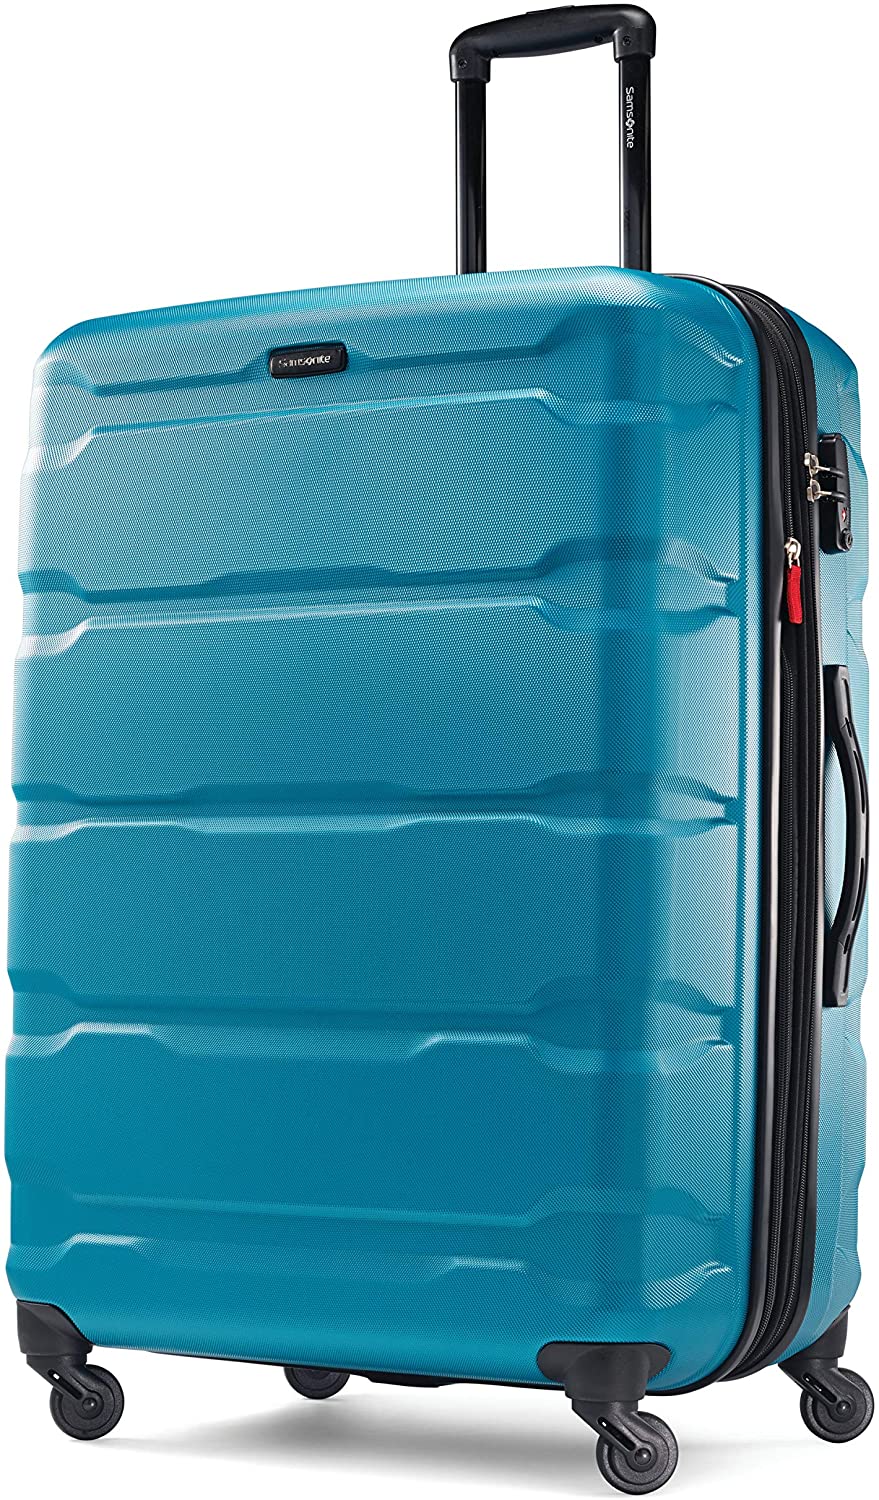 Samsonite Omni PC Hardside Suitcase With Wheels, 28-Inch